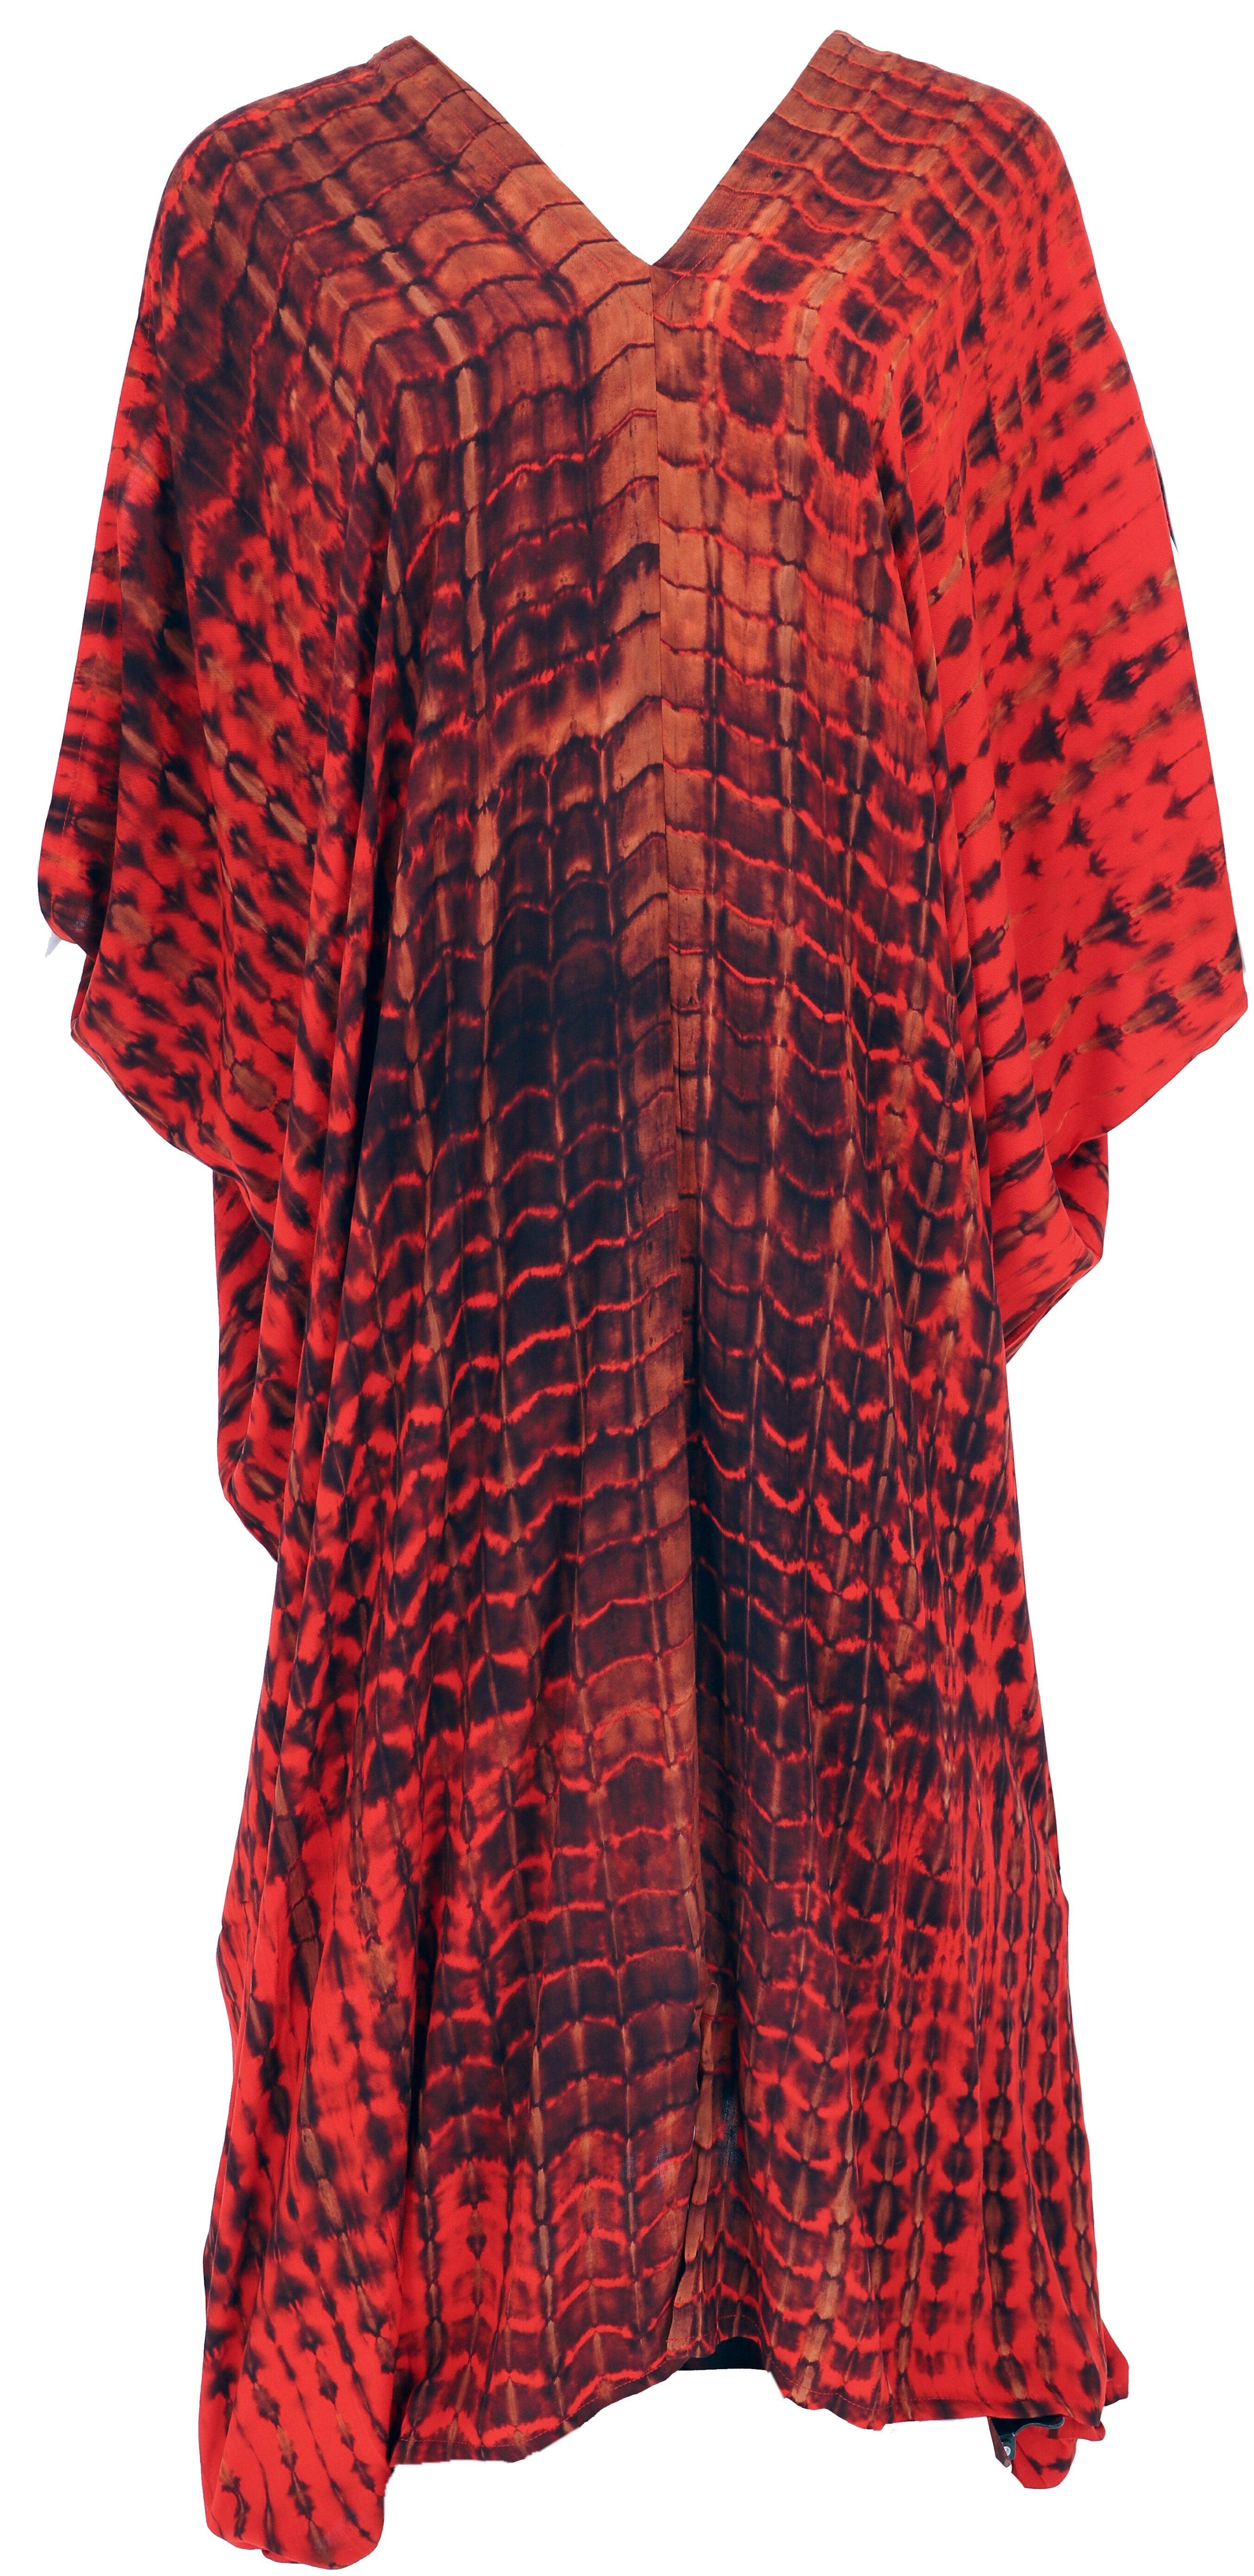 Guru-Shop Midikleid Batikkleid, Batik Kaftan, alternative rot Bekleidung Strandkleid.. oversize